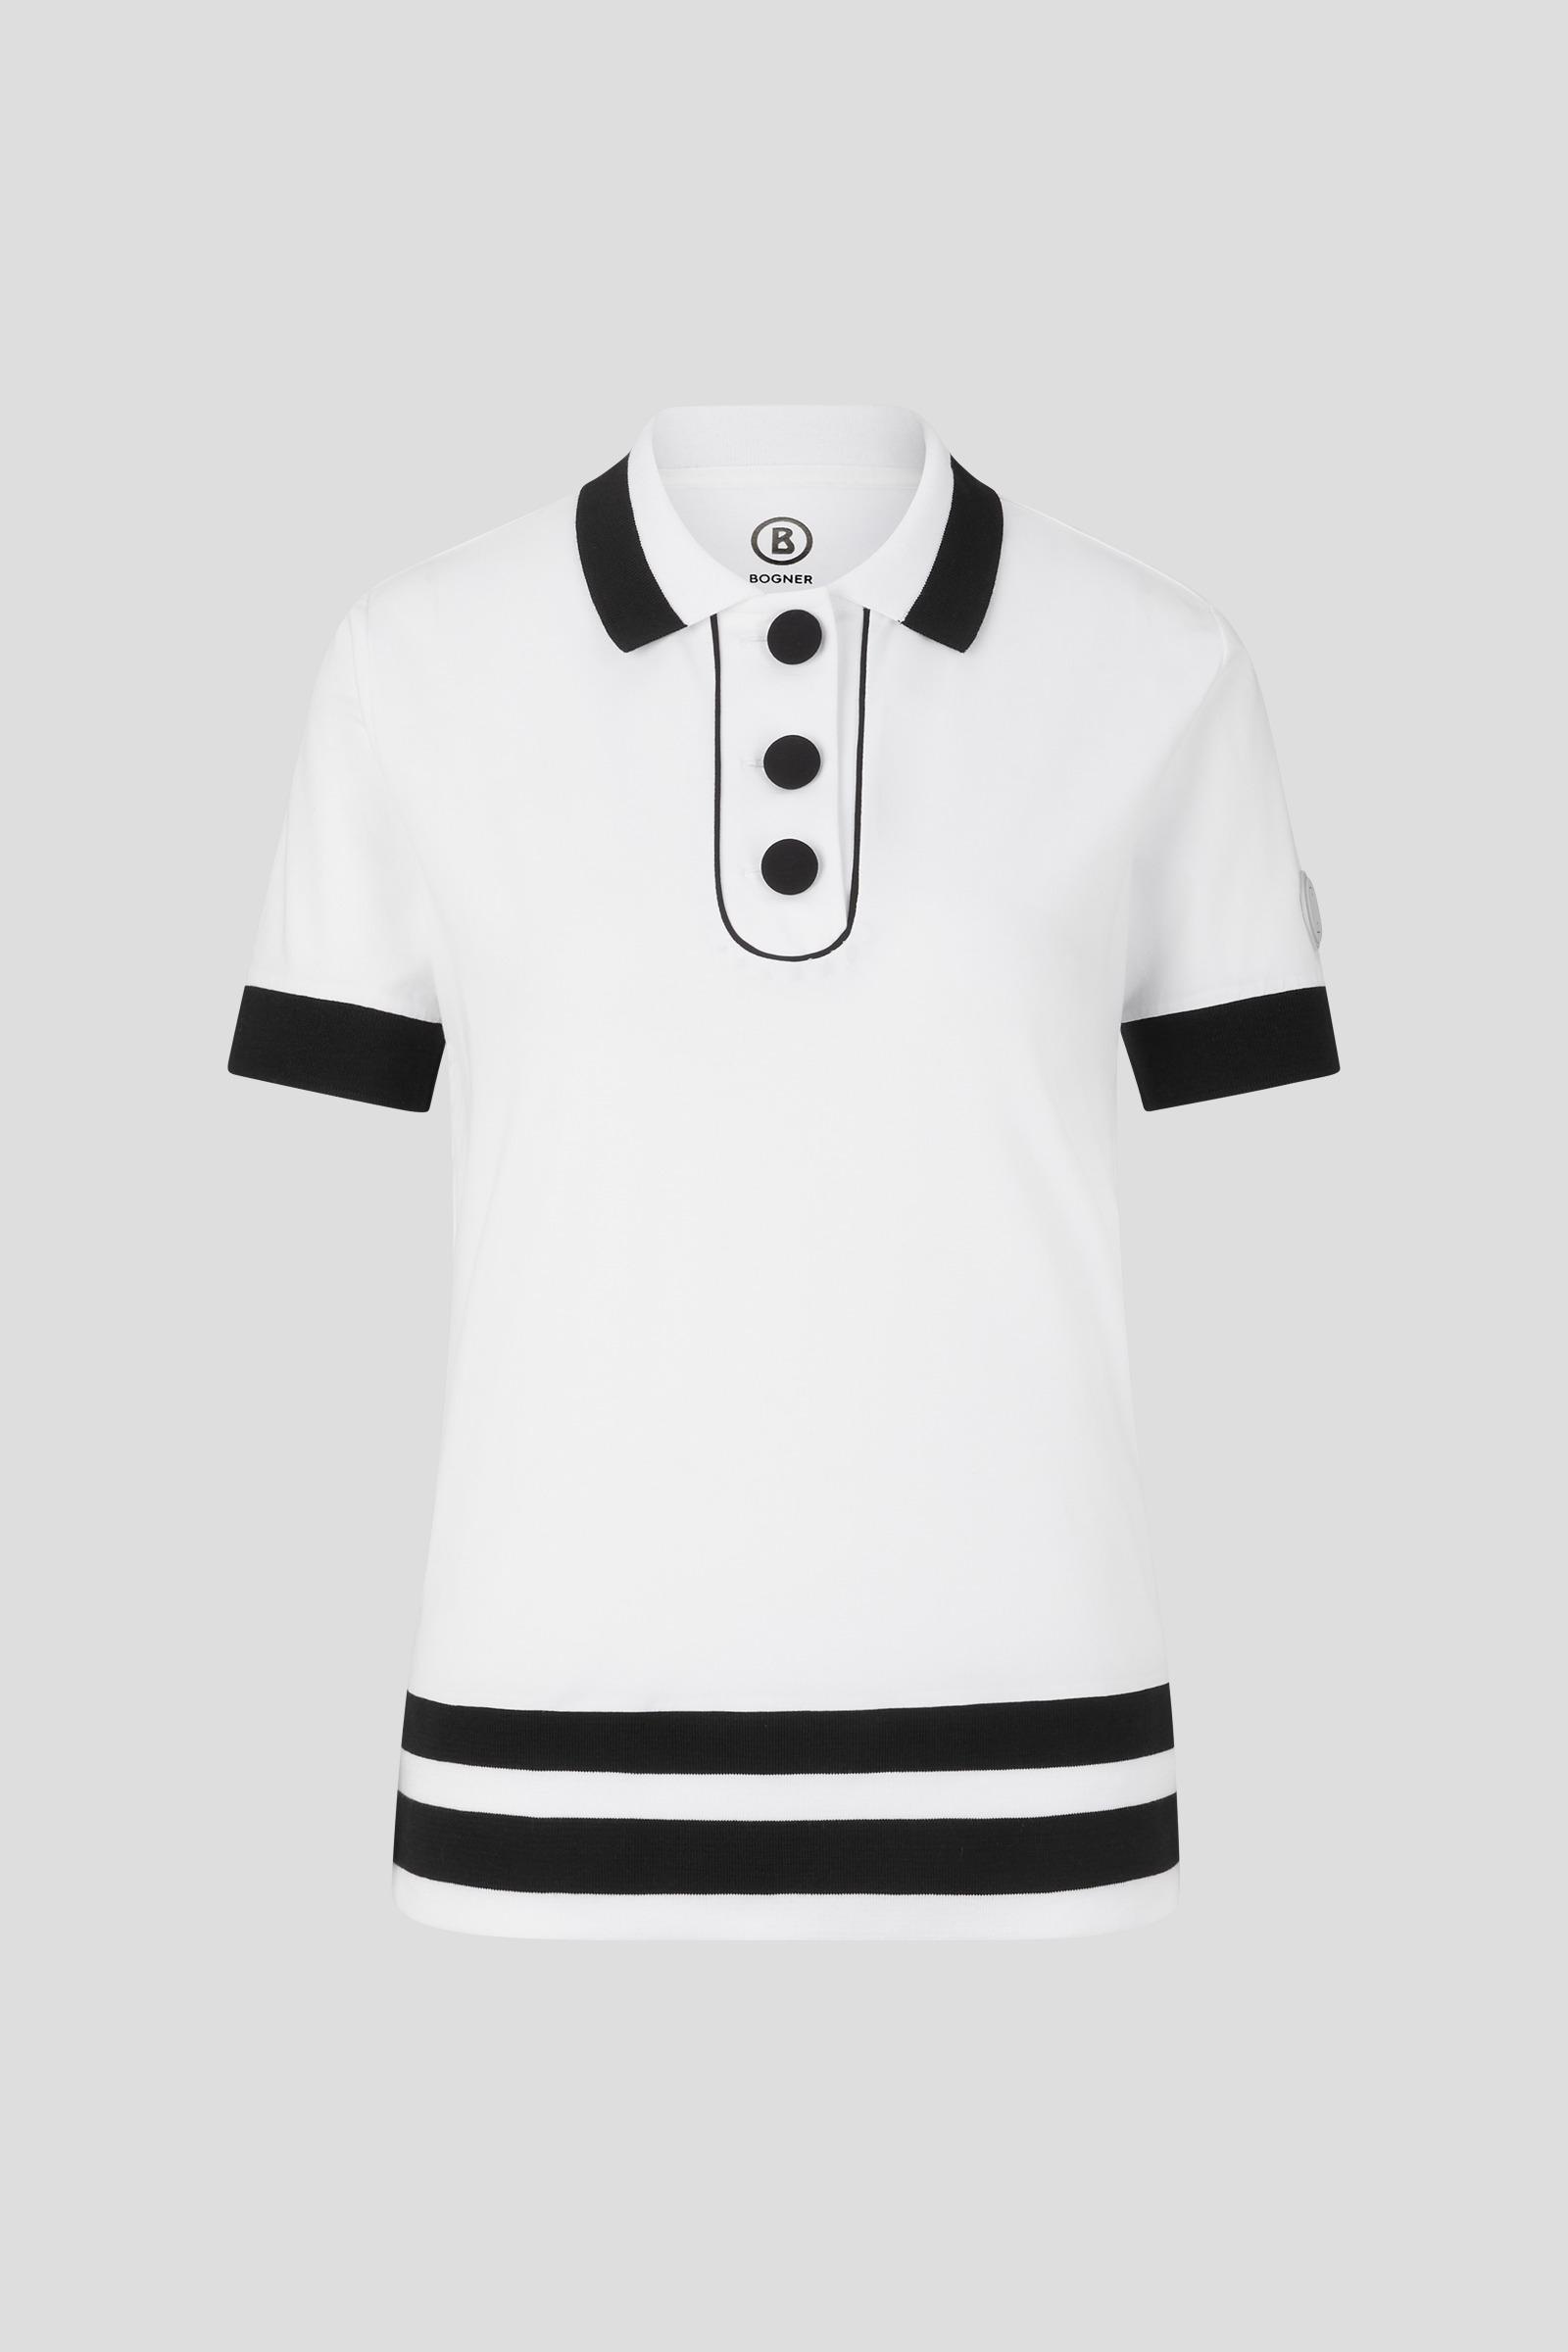 Bogner Cotton Freda Polo Shirt in White/Black (White) | Lyst